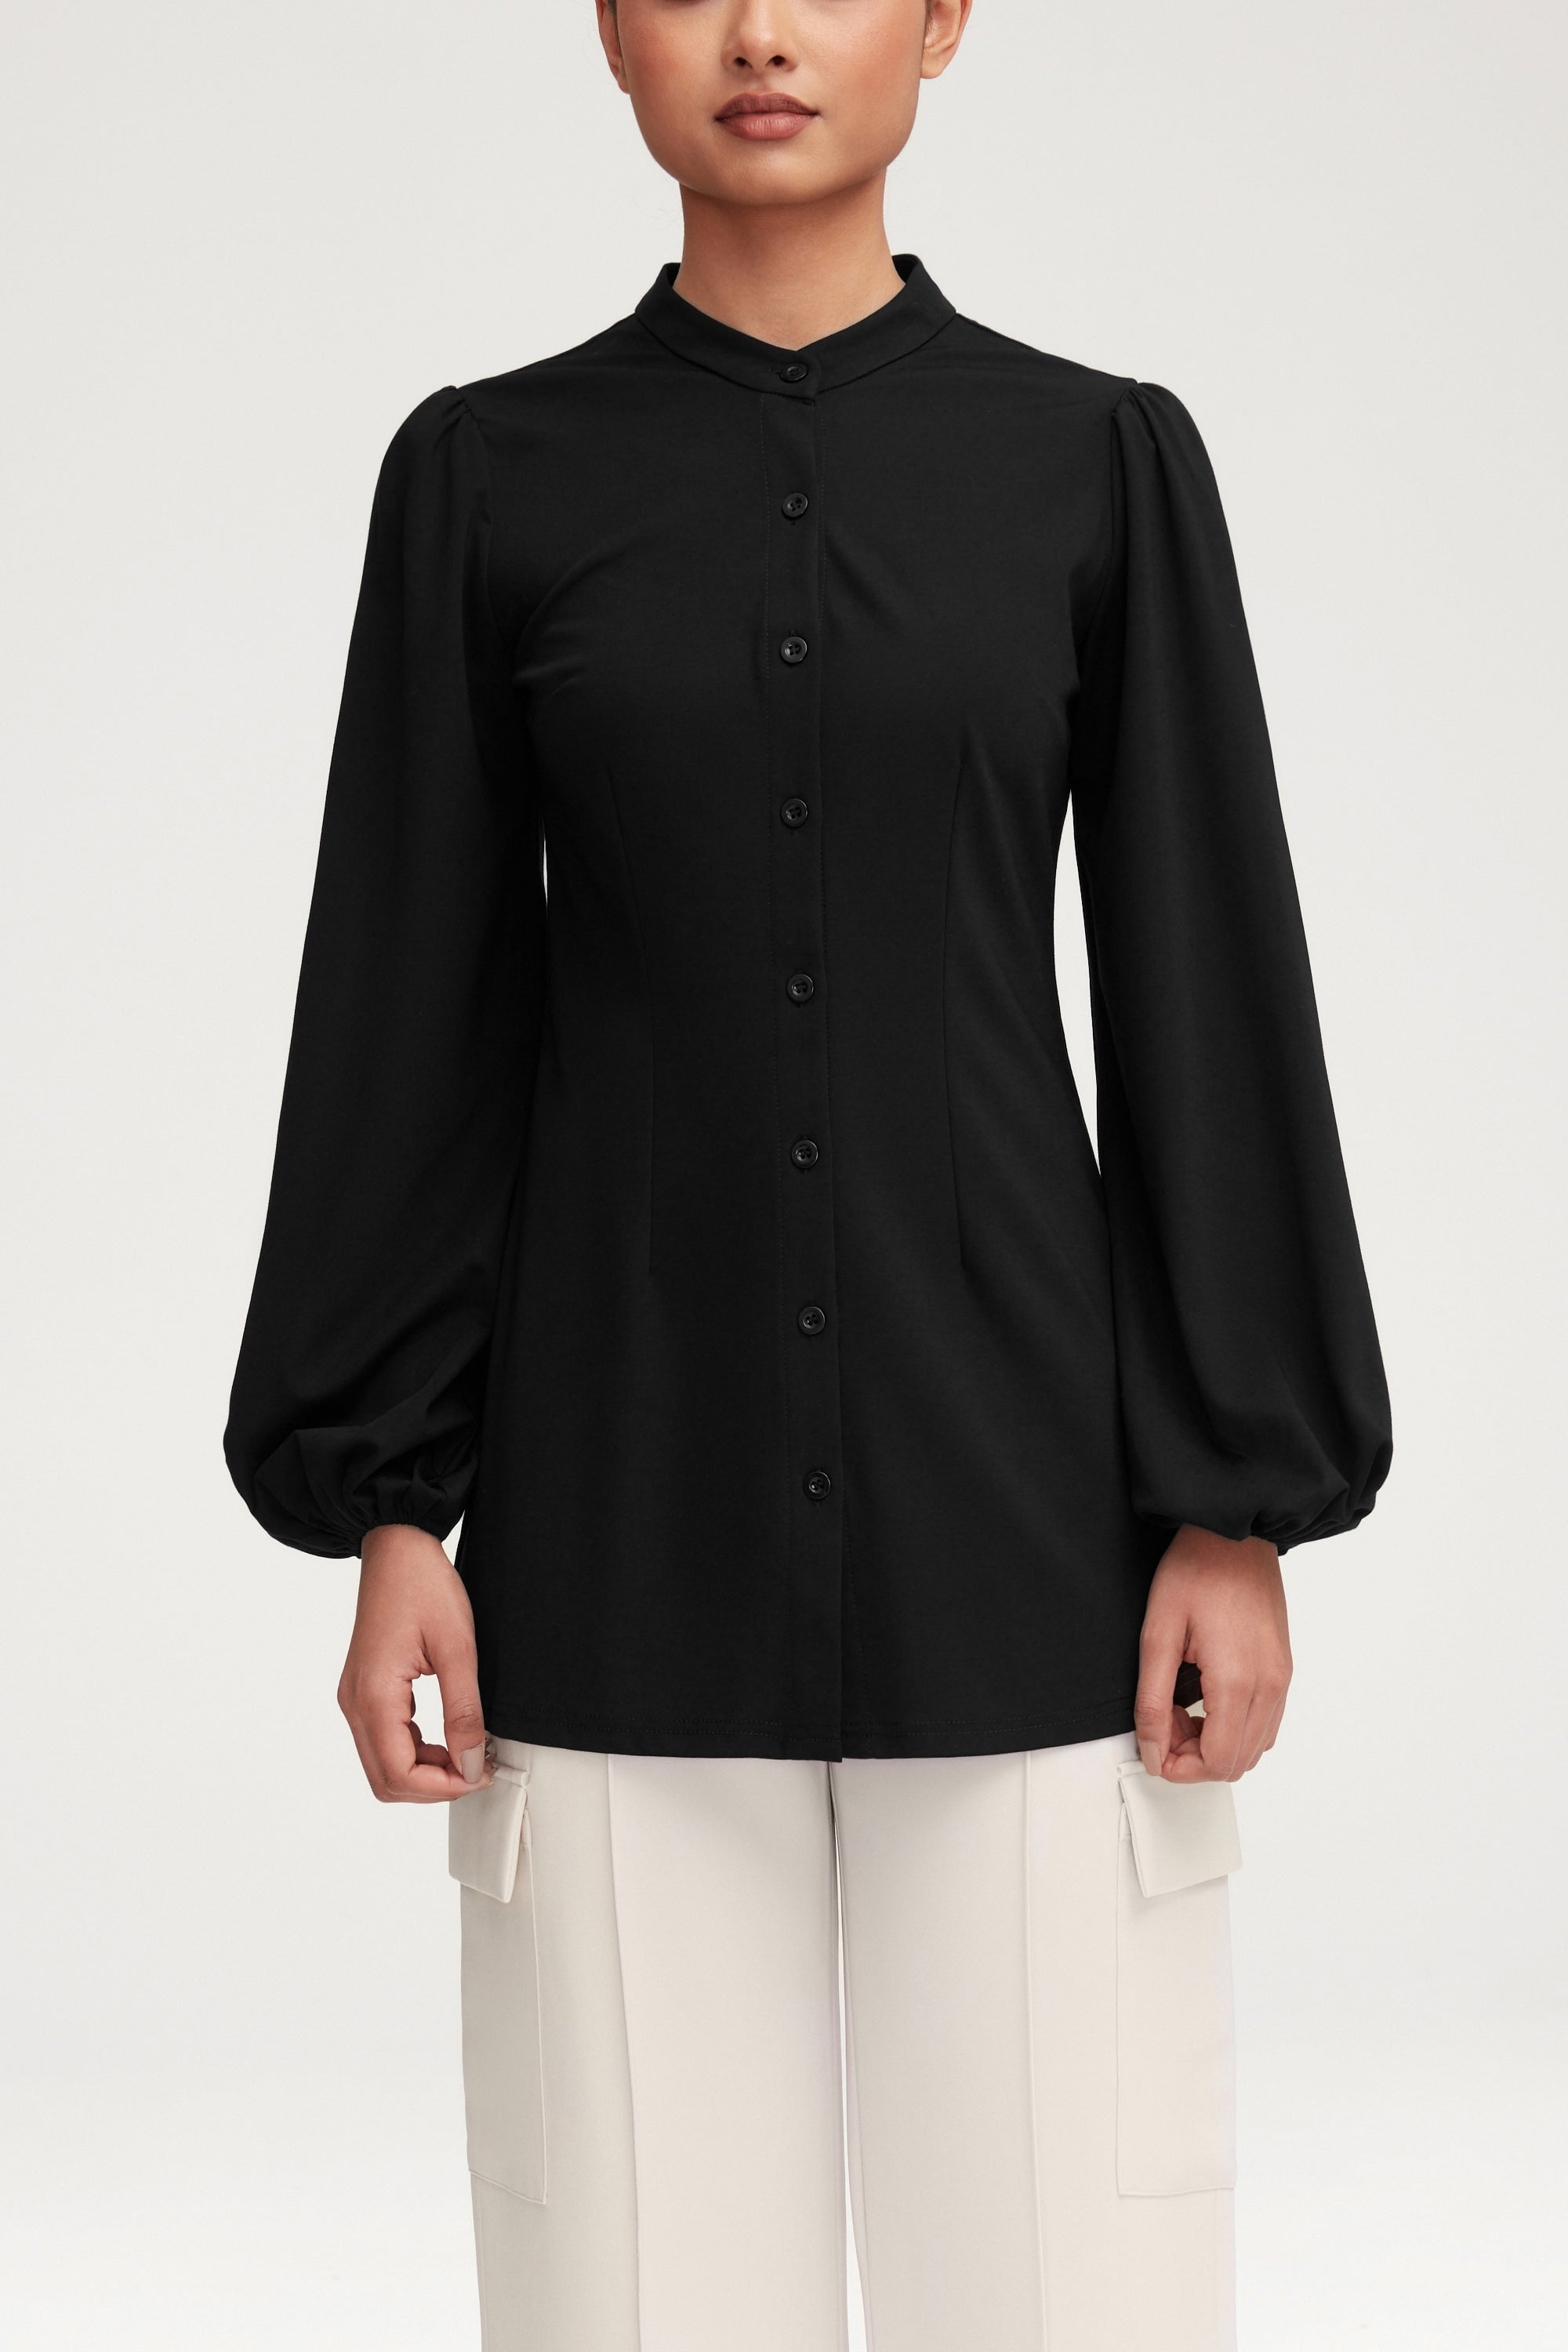 Rayana Jersey Button Down Top - Black Clothing saigonodysseyhotel 